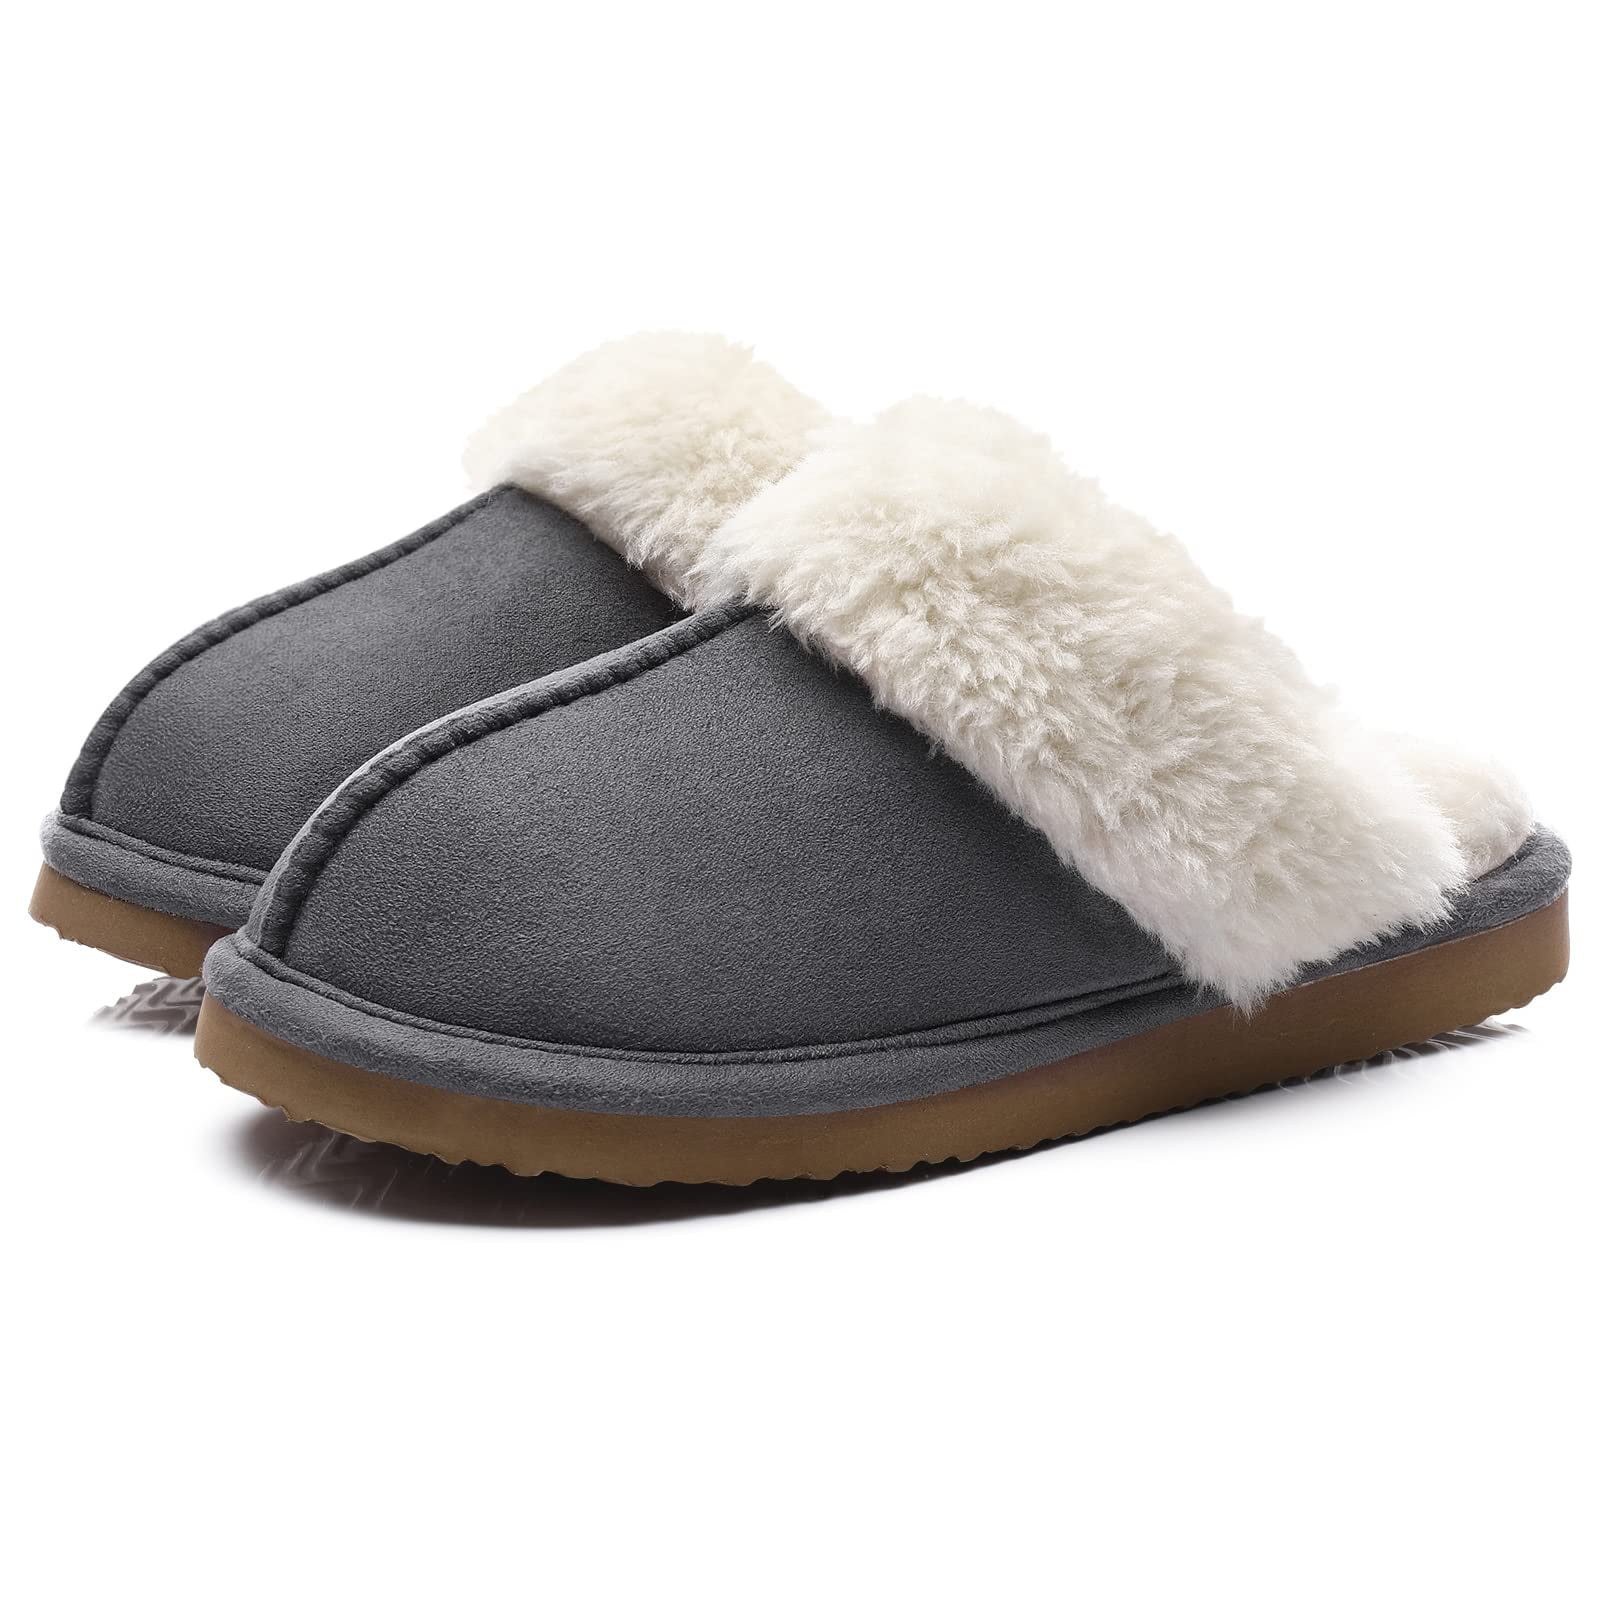 Litfun Women s Fuzzy Memory Foam Slippers Warm Comfy Winter House Shoes Grey Size 7 7 5 2f1602c3 be05 44cc 83f1 0cc5ab92dda4.d3b6226fd5800ac208e2eb76a687a336